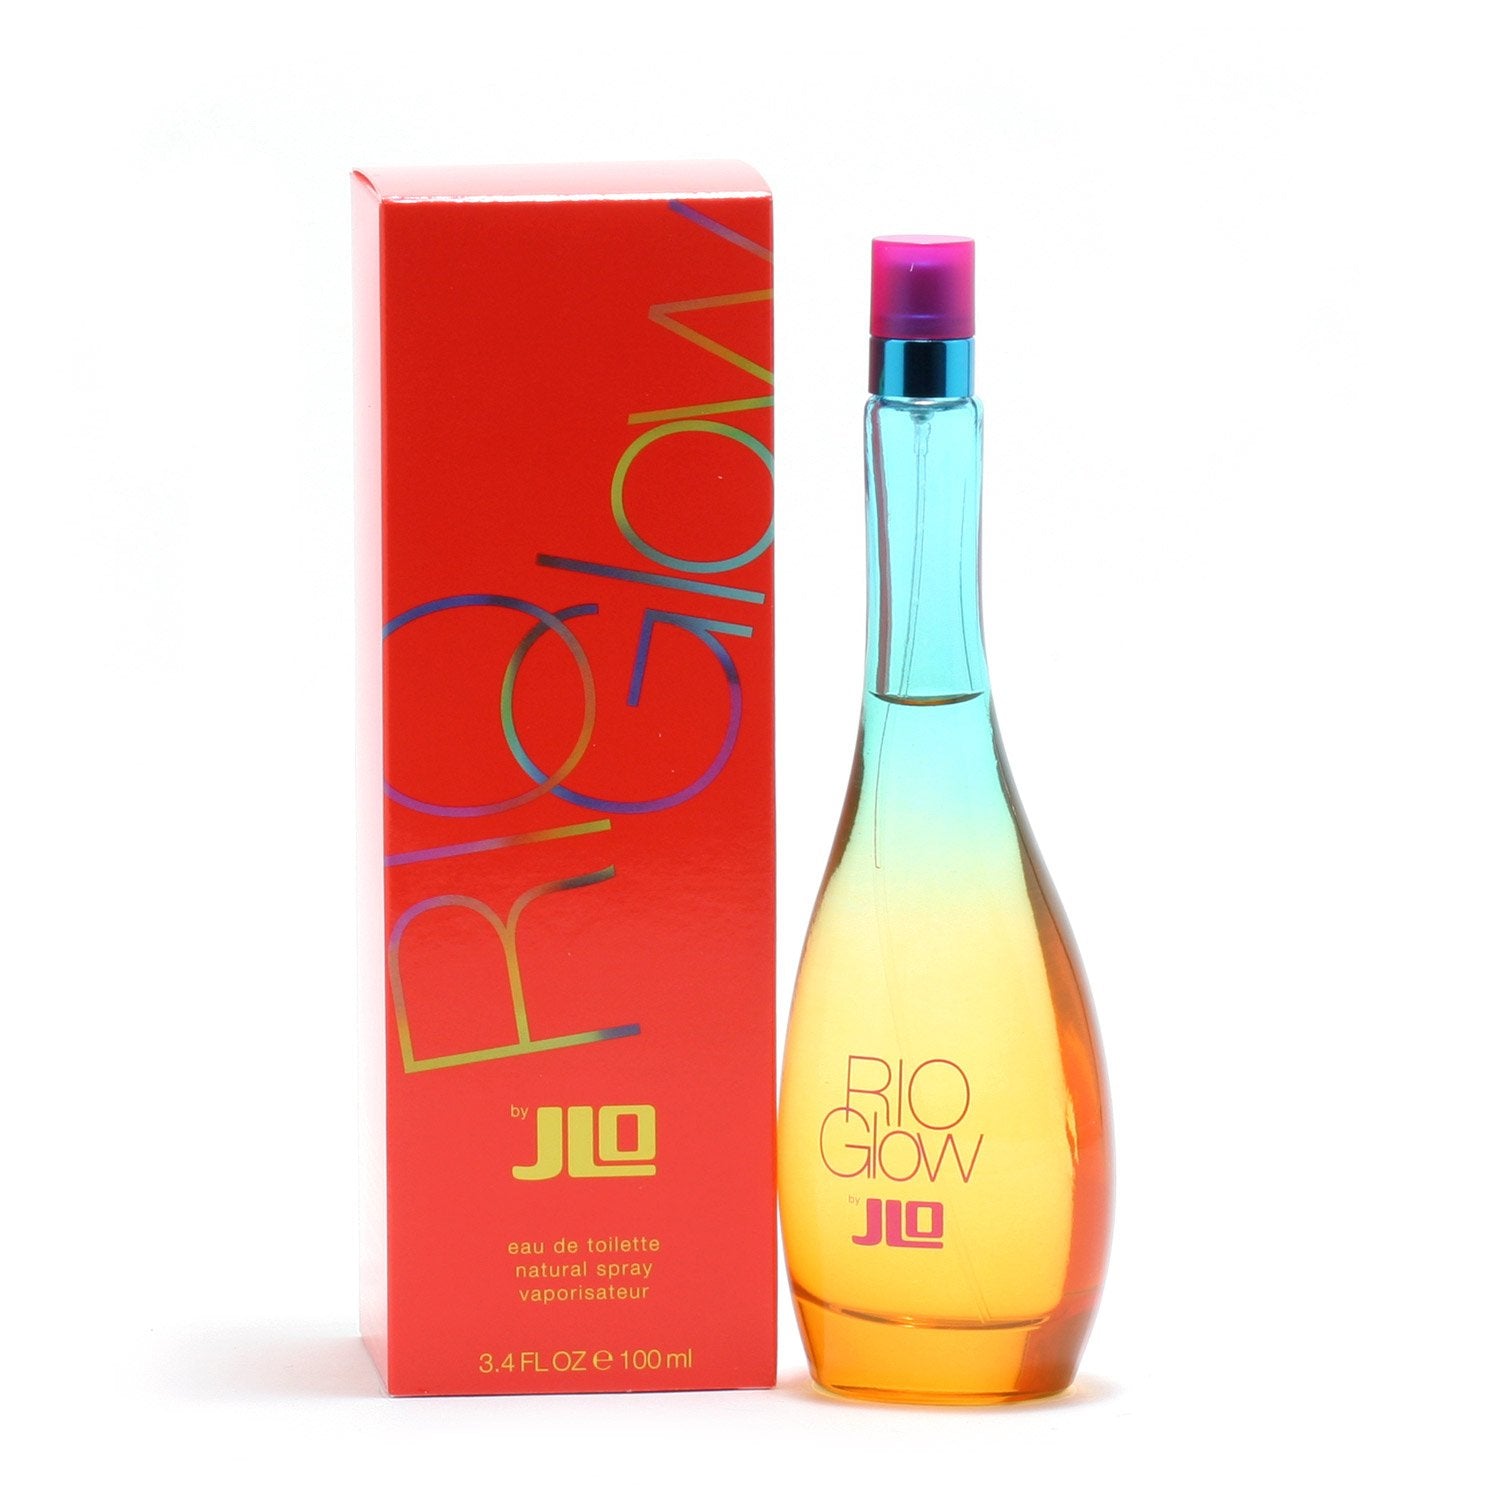 Perfume - GLOW RIO FOR WOMEN BY J.LO - EAU DE TOILETTE SPRAY, 3.4 OZ